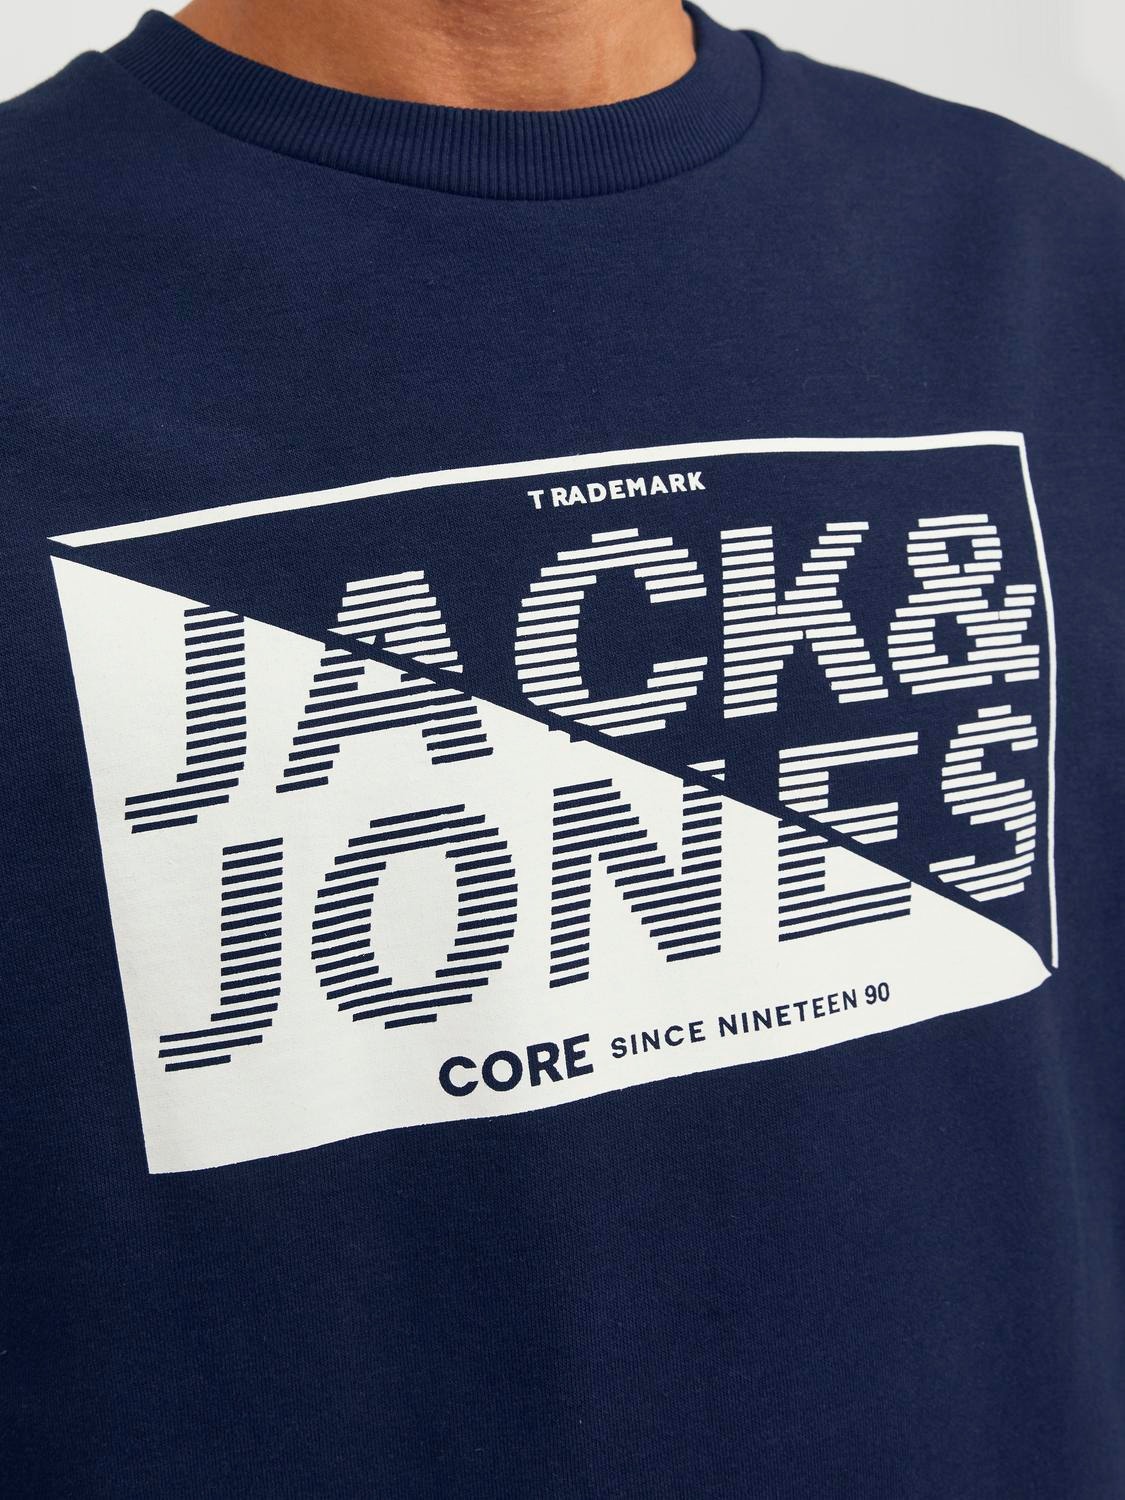 Jack & Jones Logo Sweatshirt med rund hals -Navy Blazer - 12243922